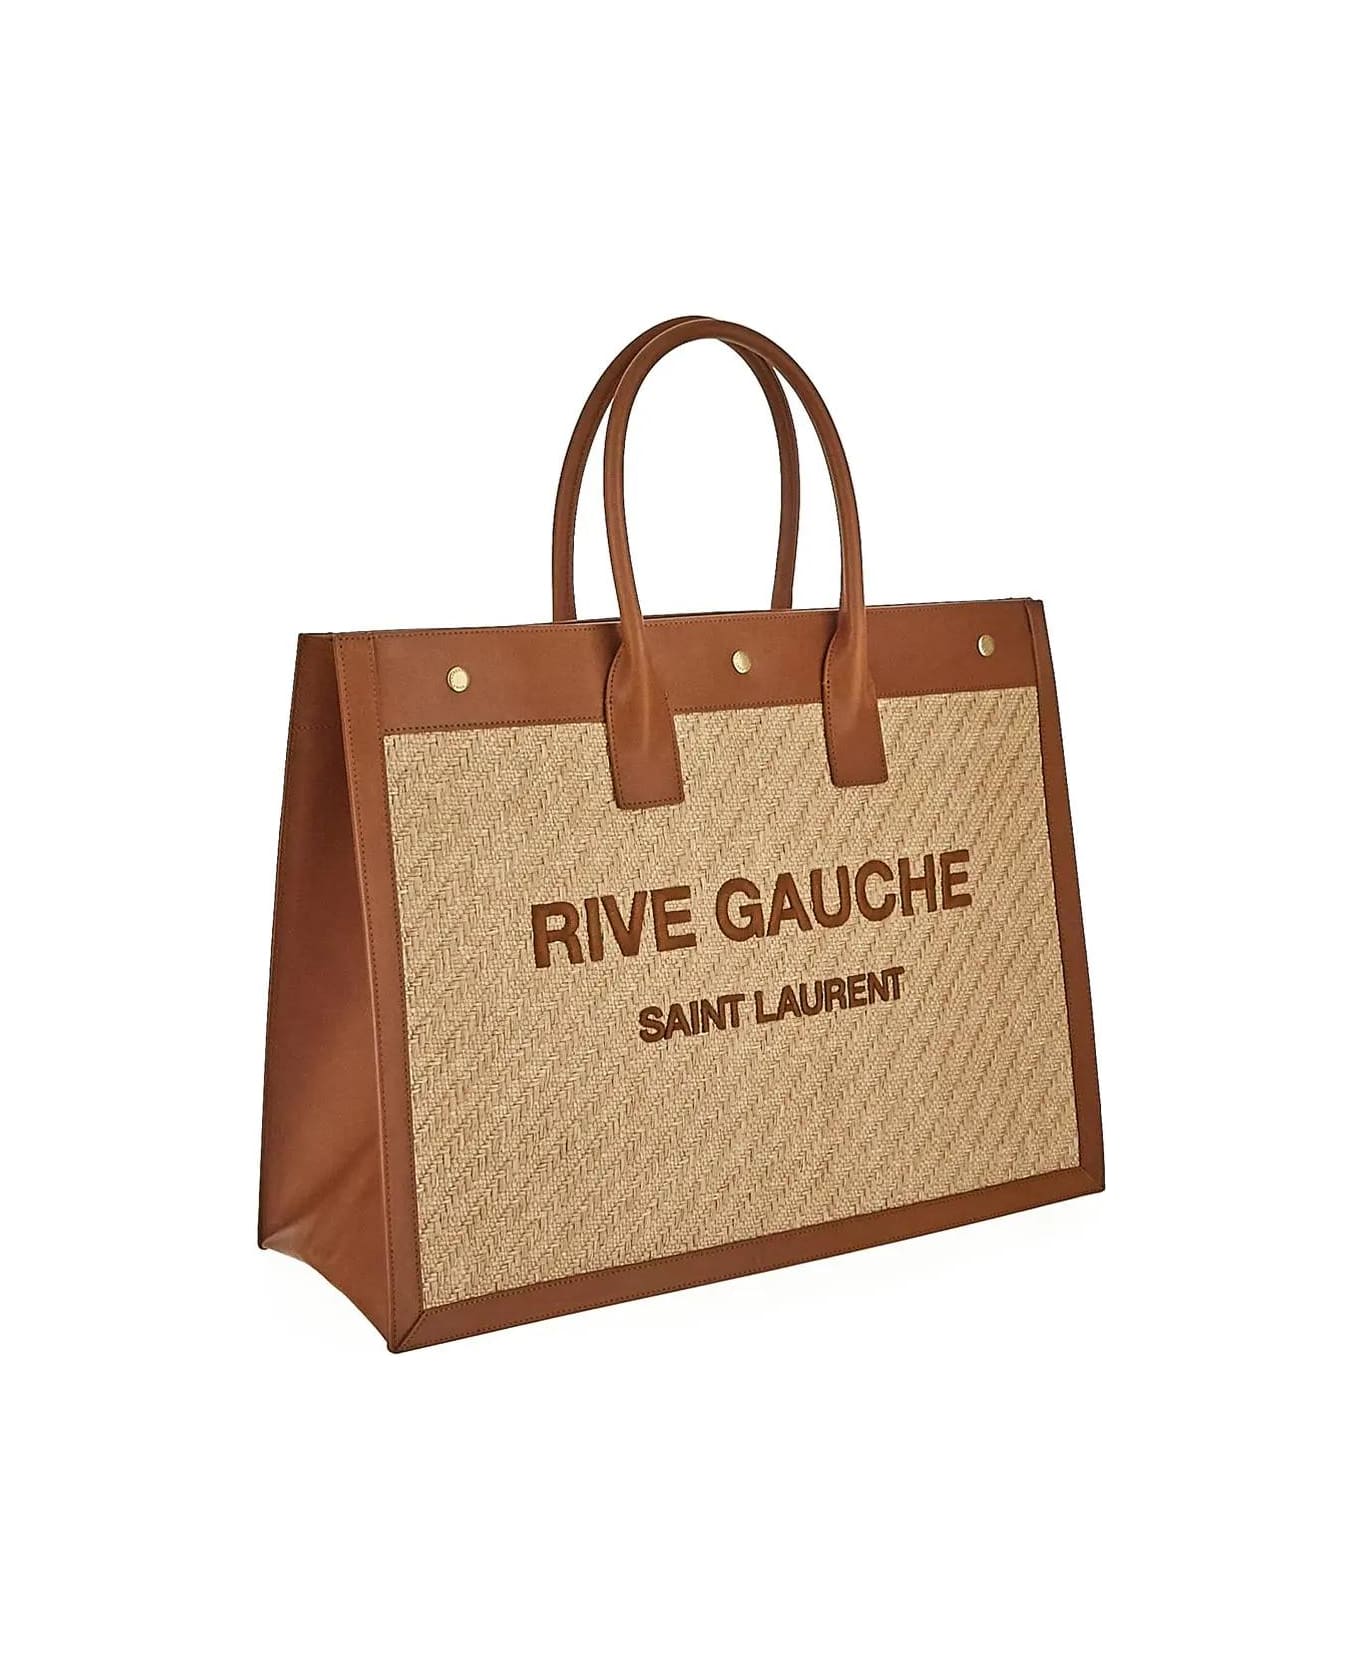 Saint Laurent Rive Gauche Tote Bag - Brown トートバッグ